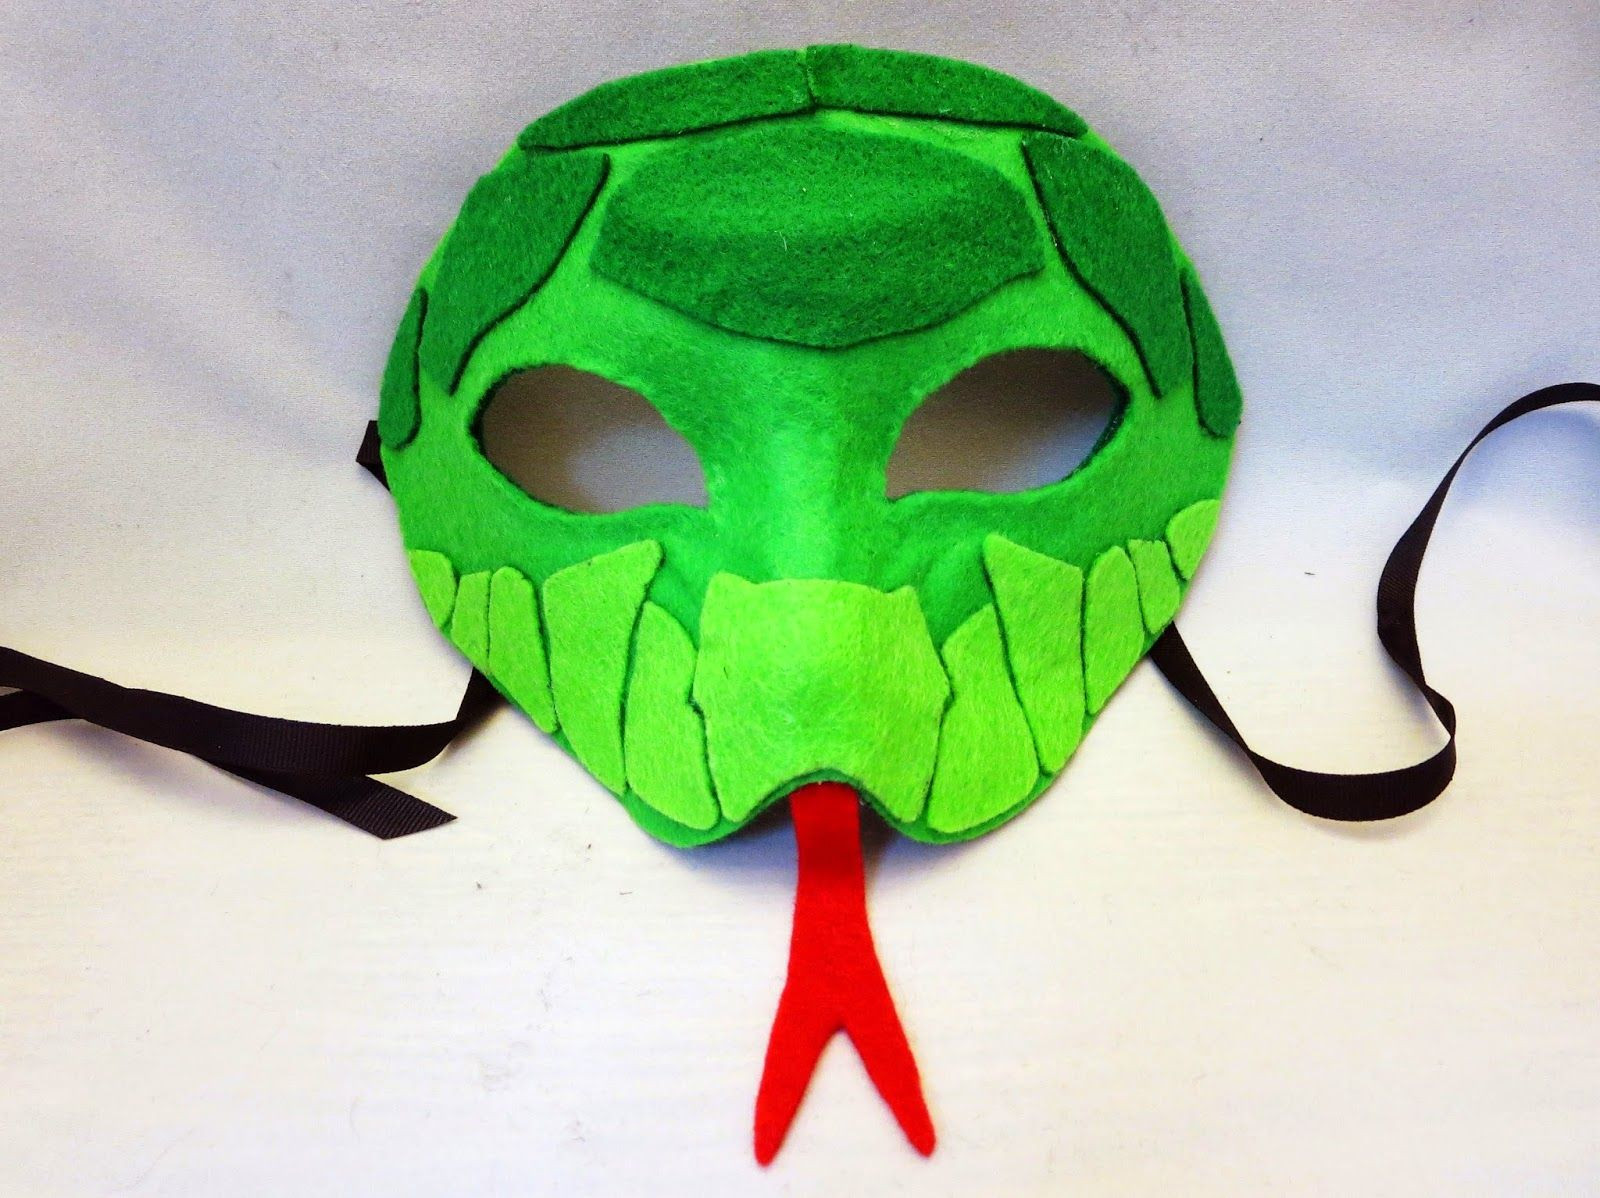 Best ideas about Snake Costume DIY
. Save or Pin DIY Felt Snake Mask DIY Now.